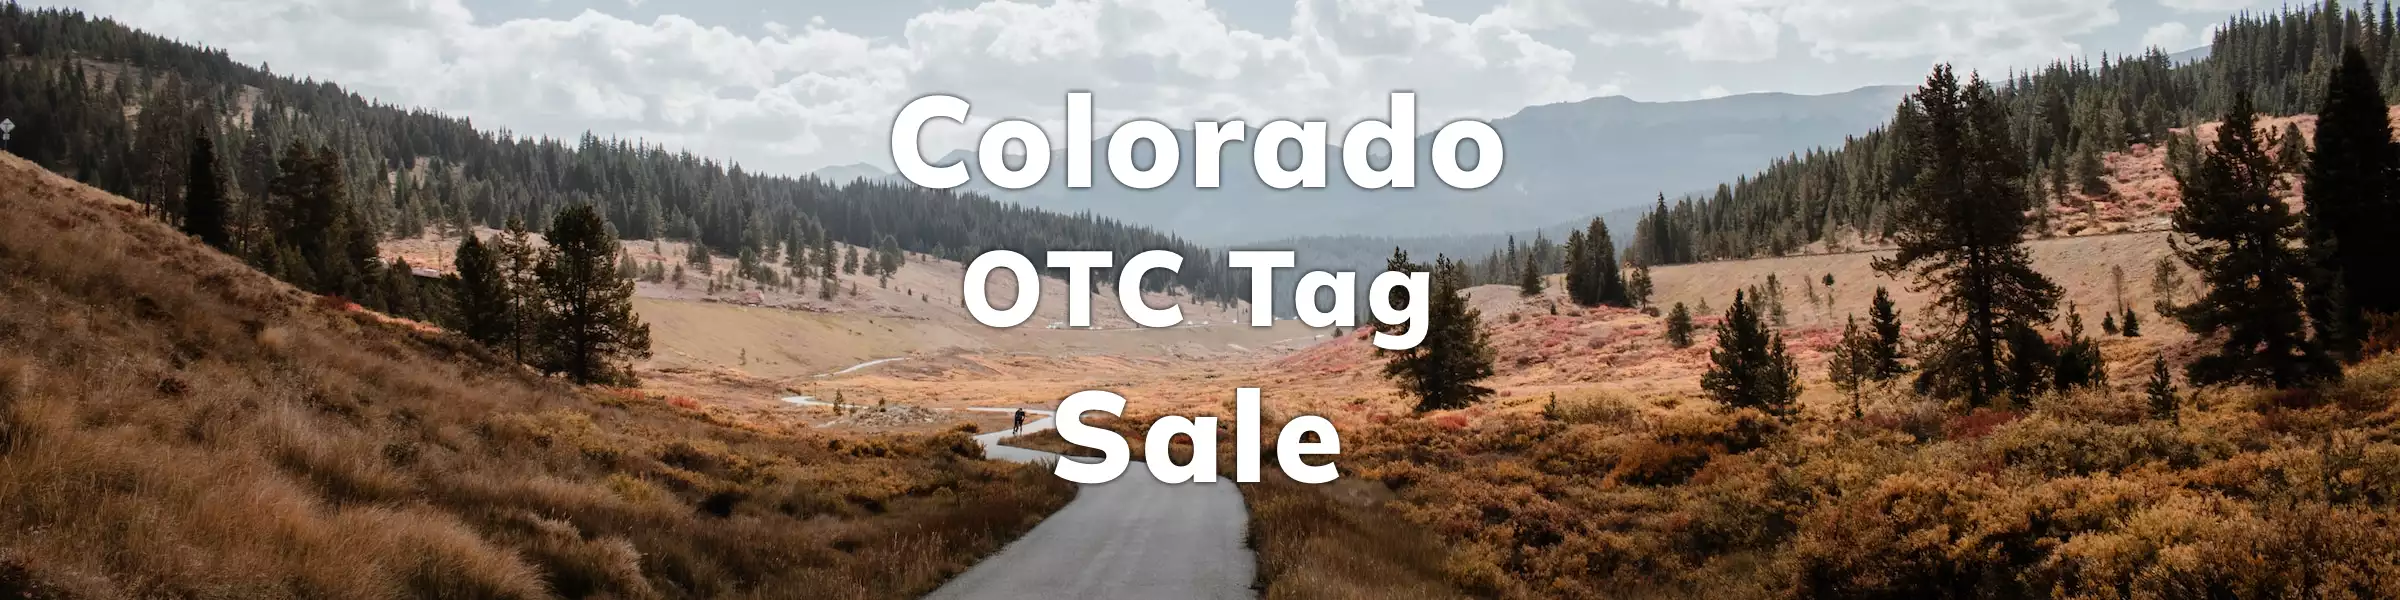 Colorado OTC Tag Sale